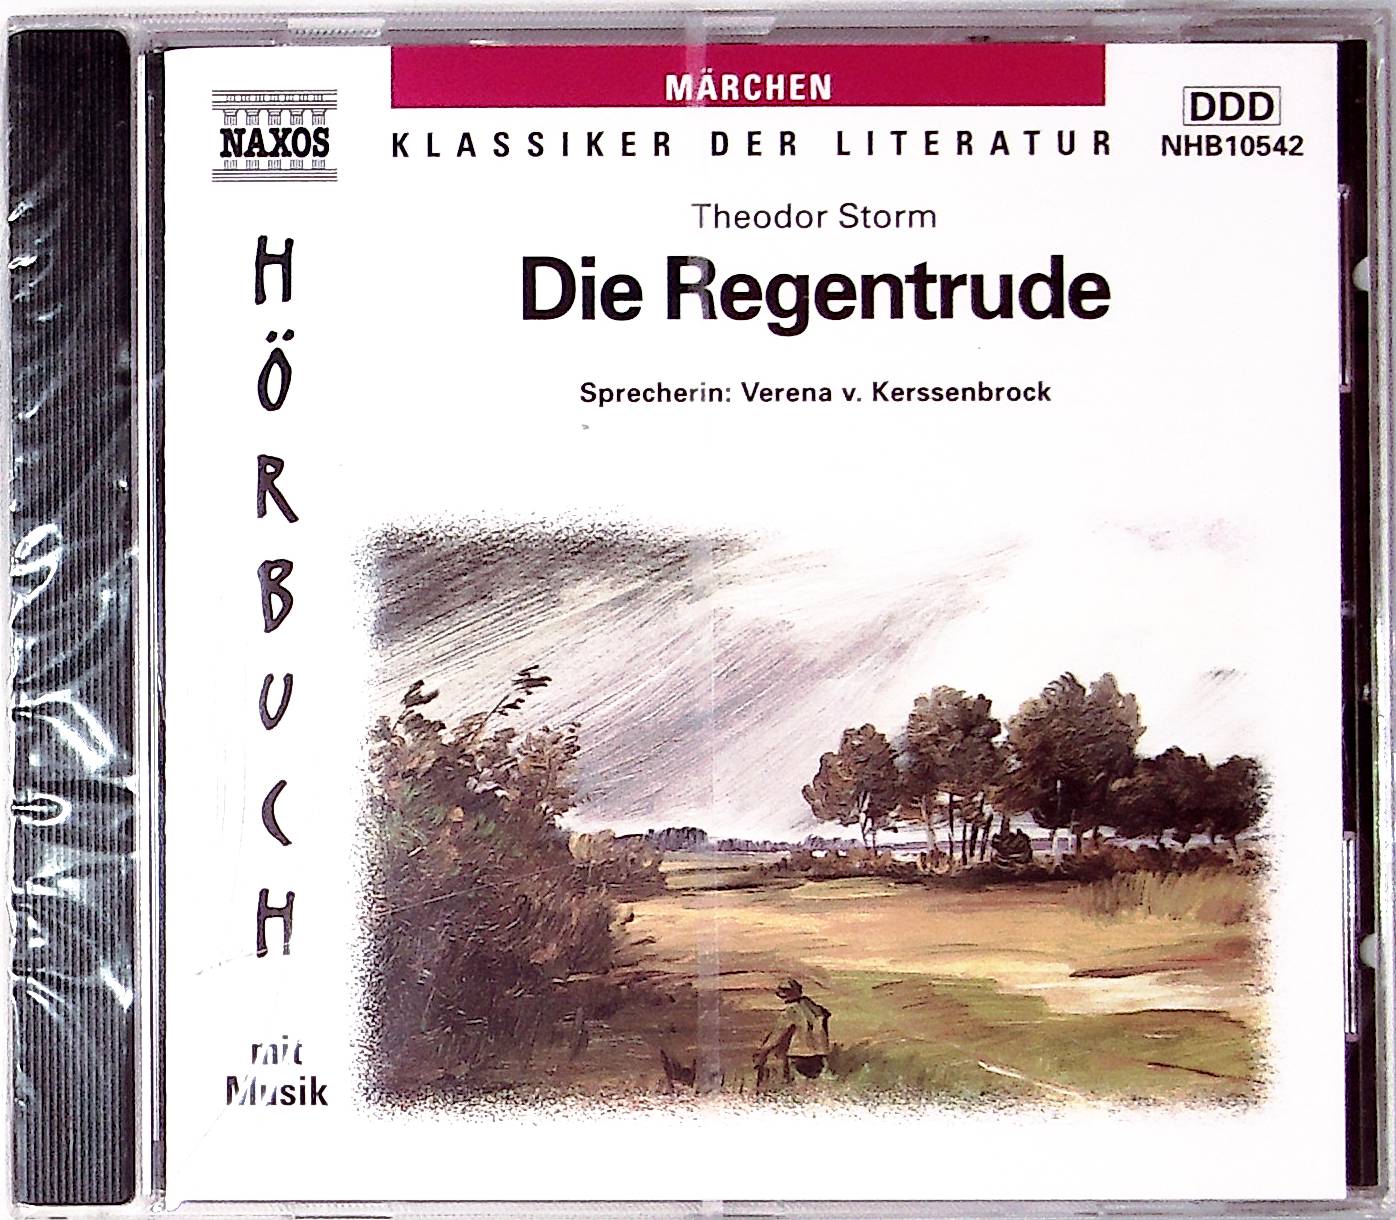 Die Regentrude. CD. (Klassiker der Literatur): Vollständiger Text. 73 Min. - Storm, Theodor